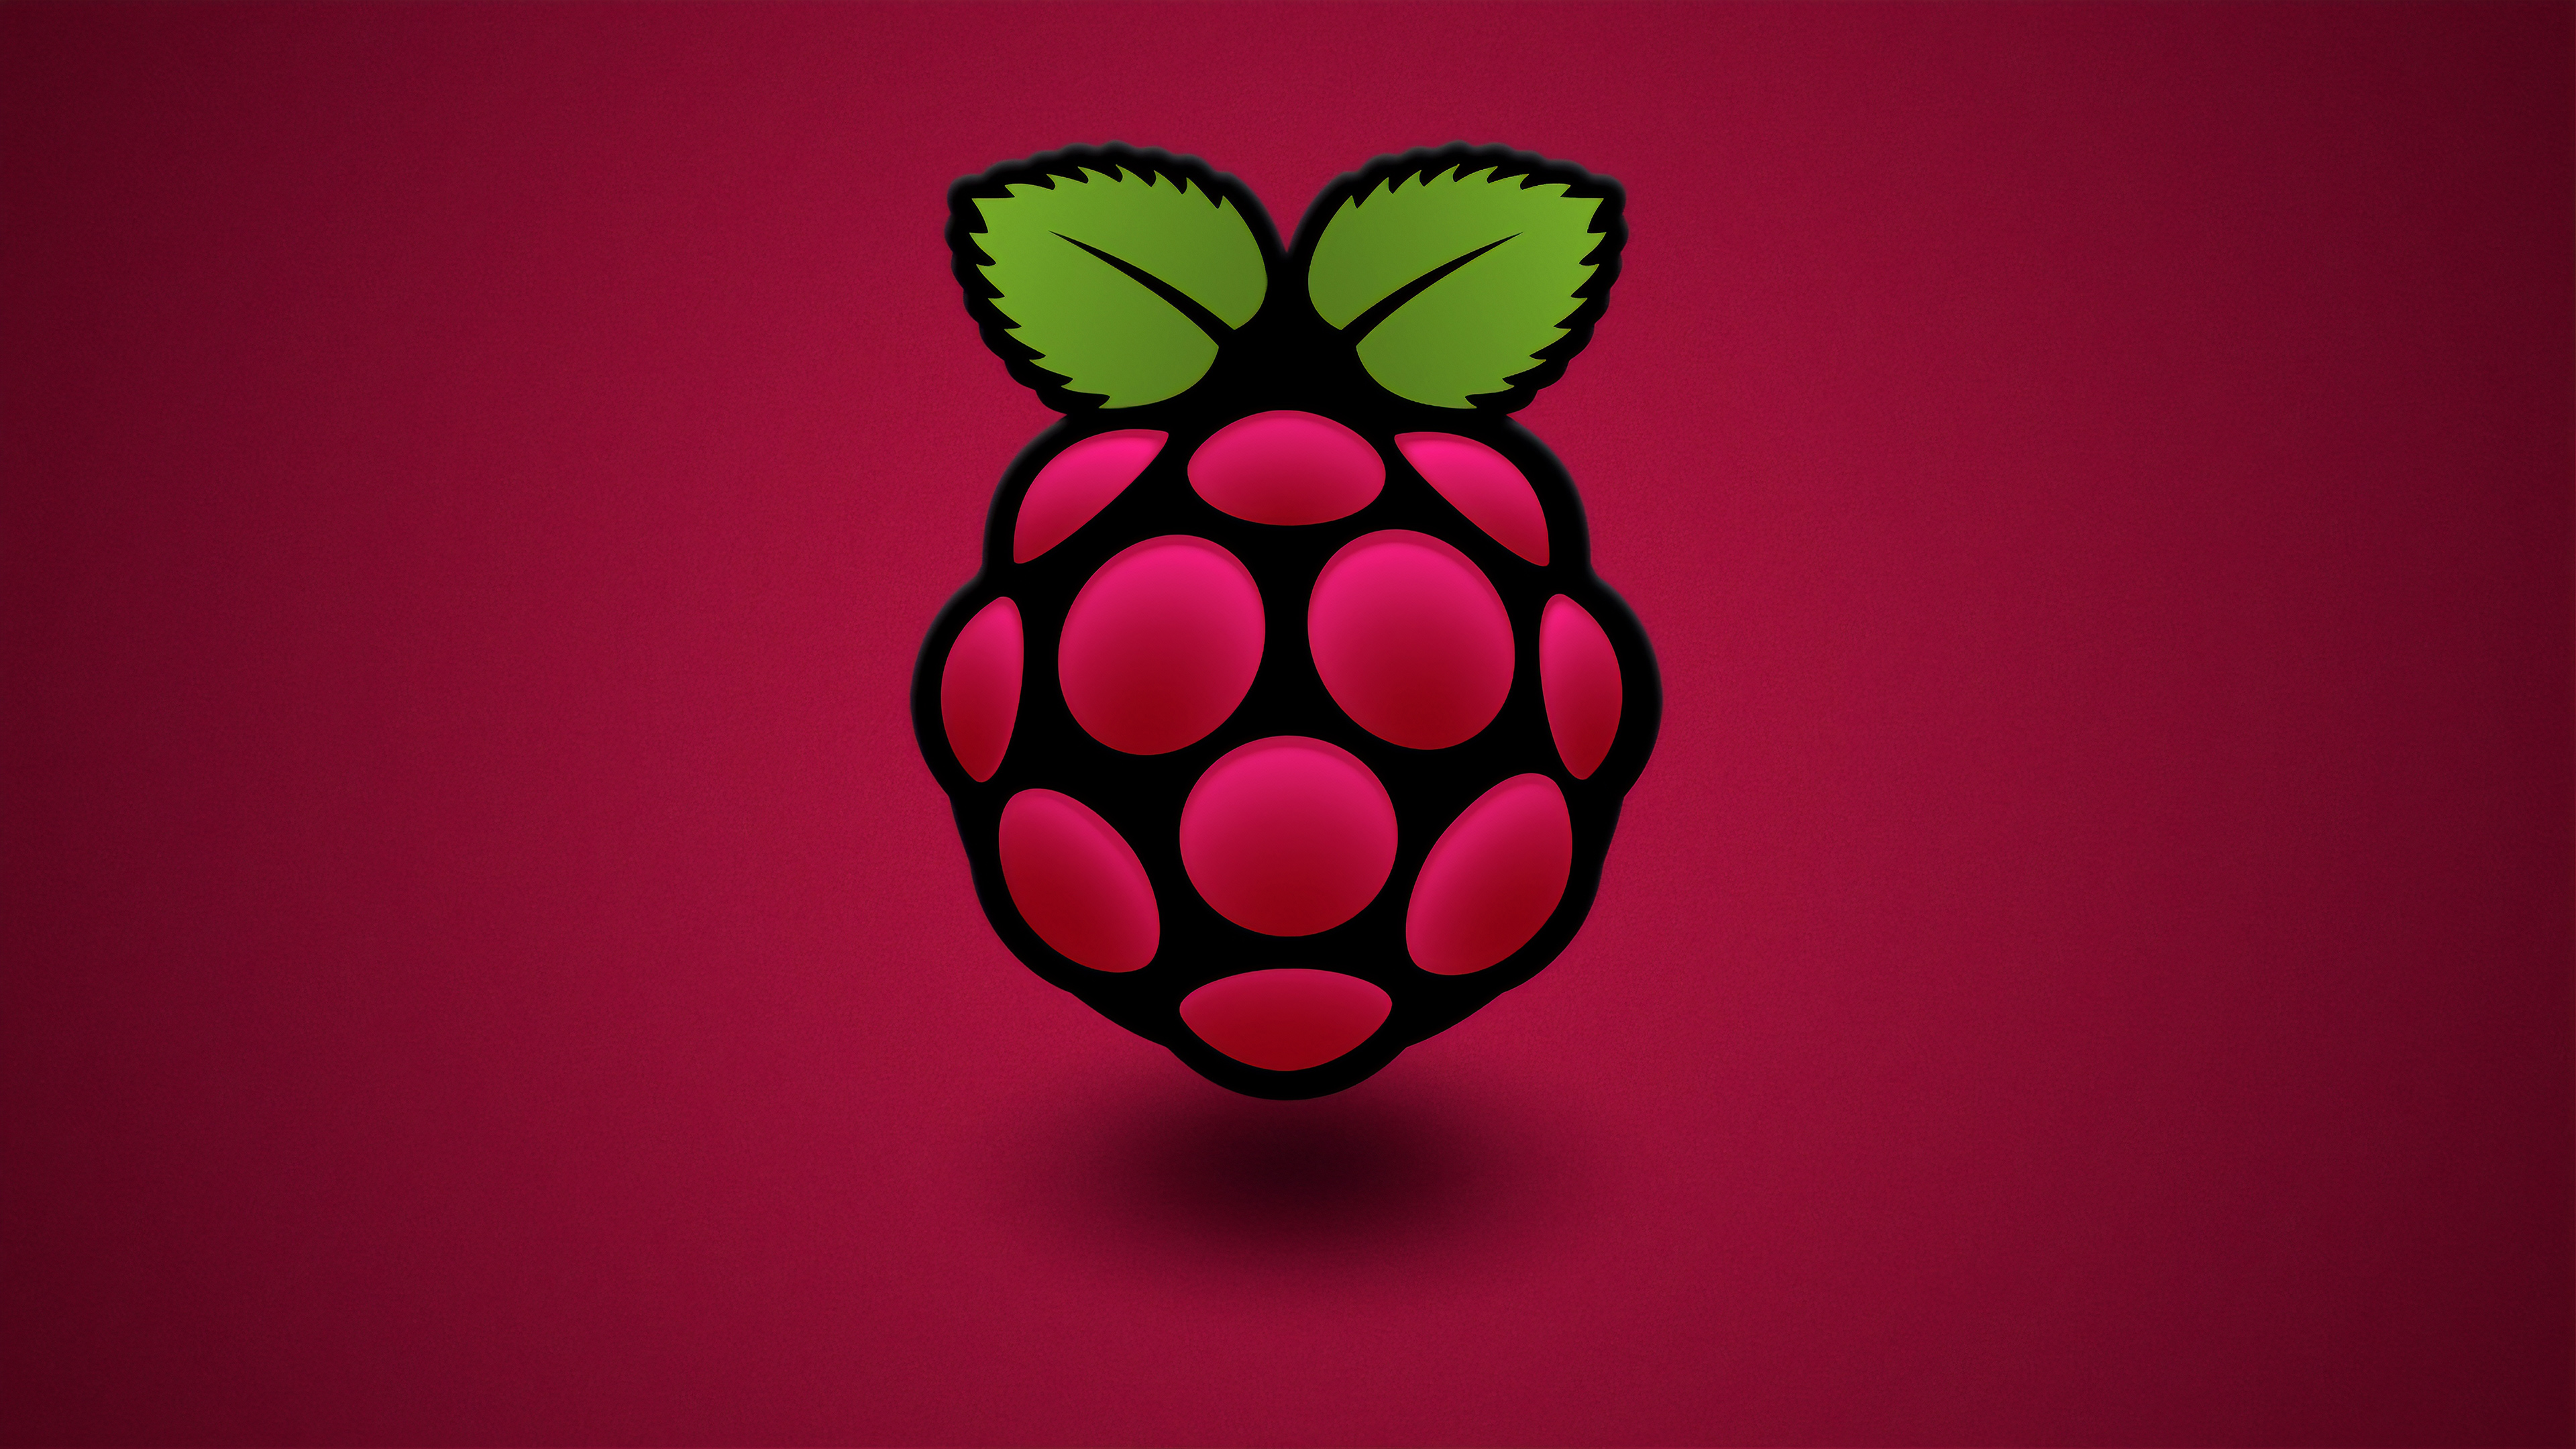 The raspberry pi logo